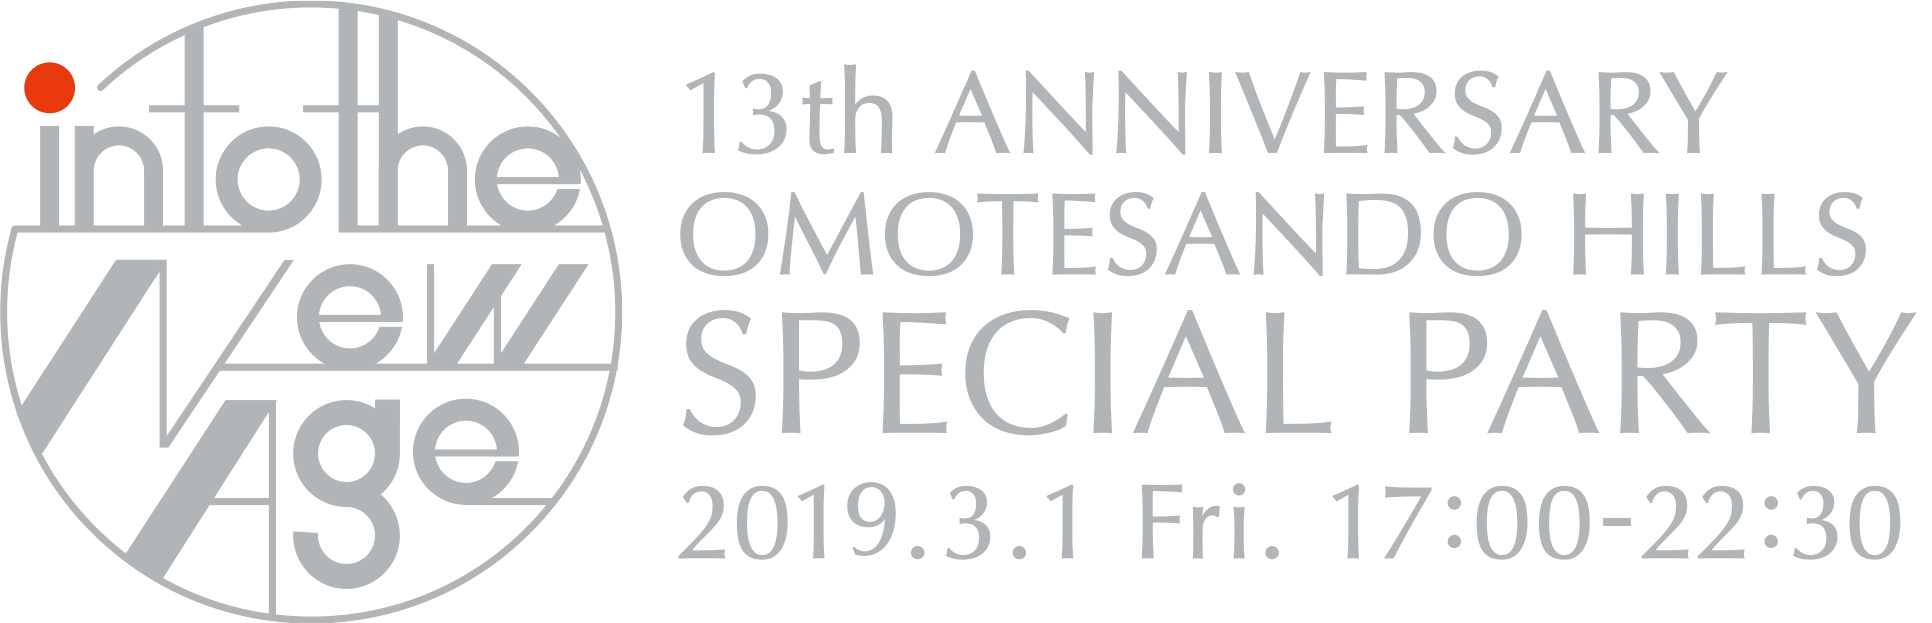 OMOTESANDO HILLS 13周年特别派对2019.3.1.FRI 17：00-22：30